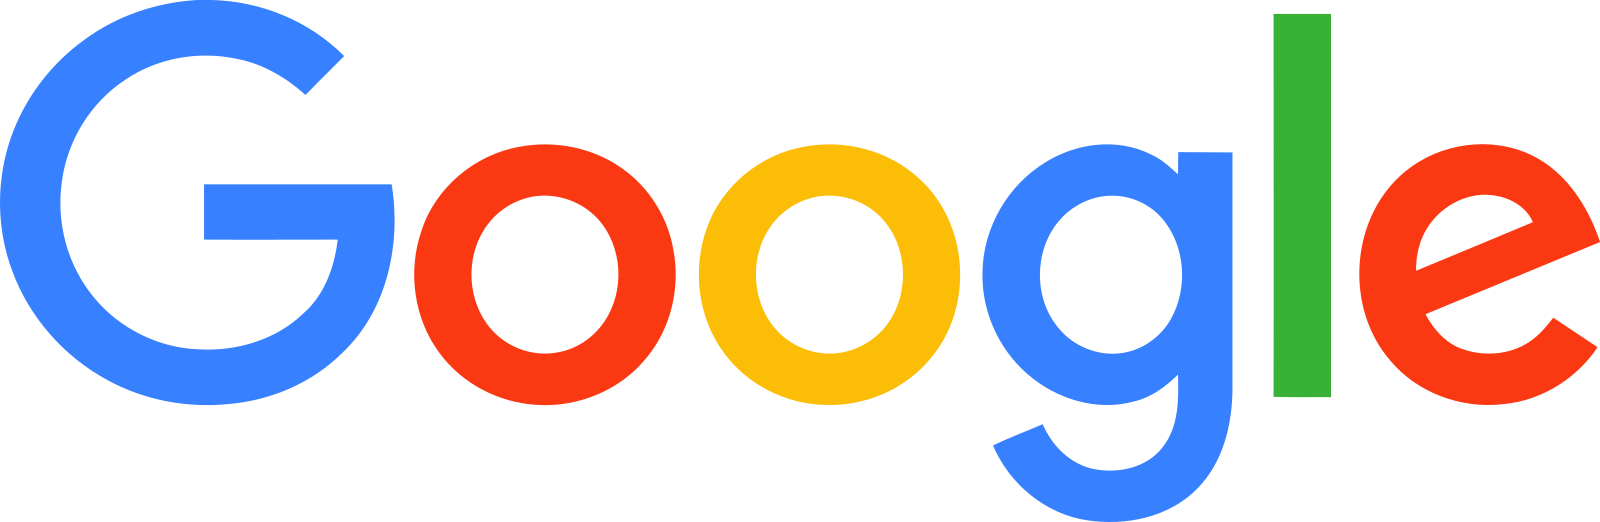 google logo 2 - Google Logo